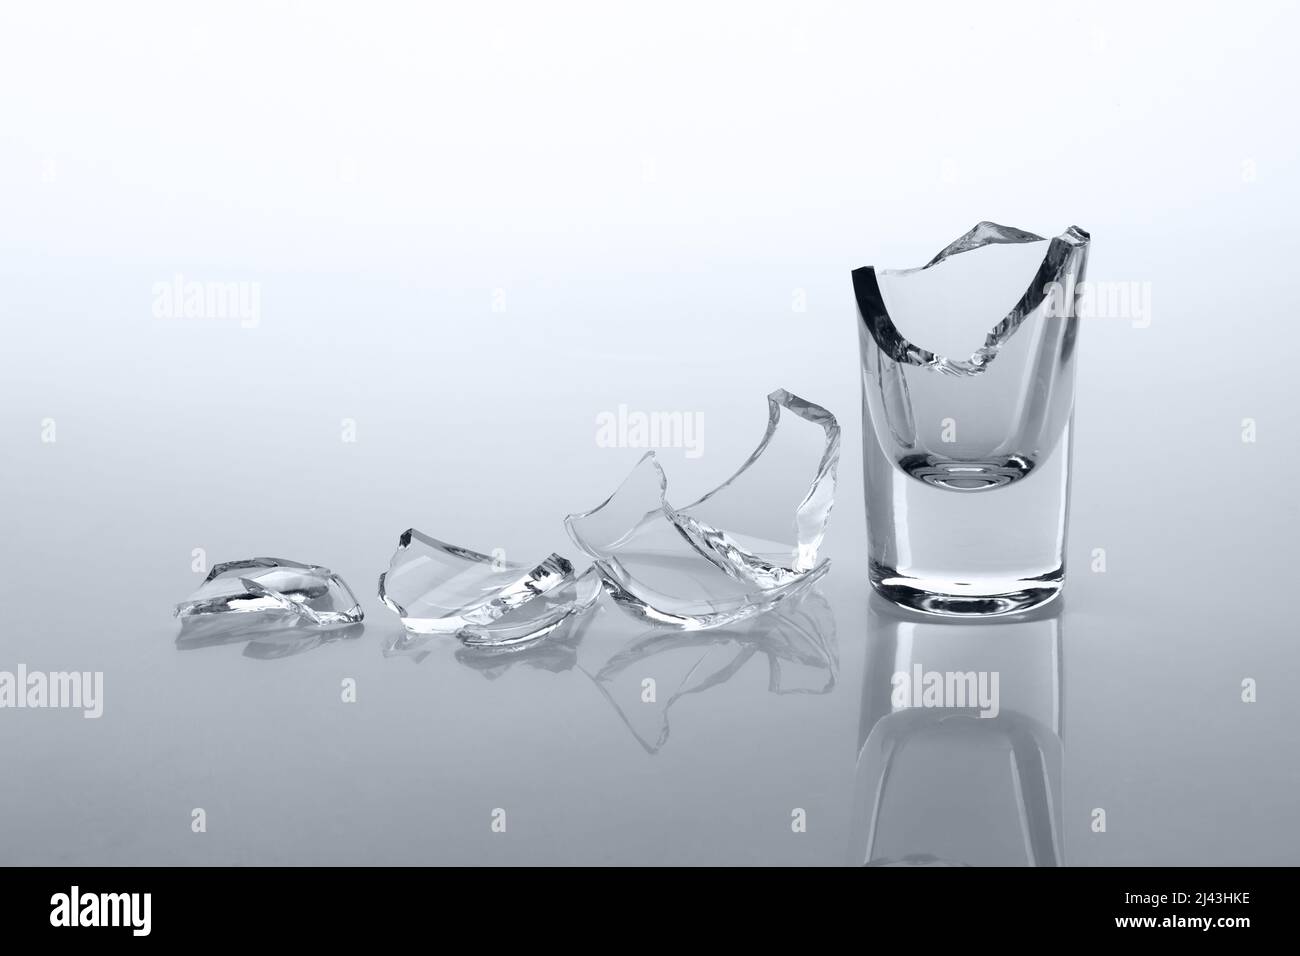 https://c8.alamy.com/comp/2J43HKE/shards-of-a-broken-glass-cup-on-a-white-background-2J43HKE.jpg